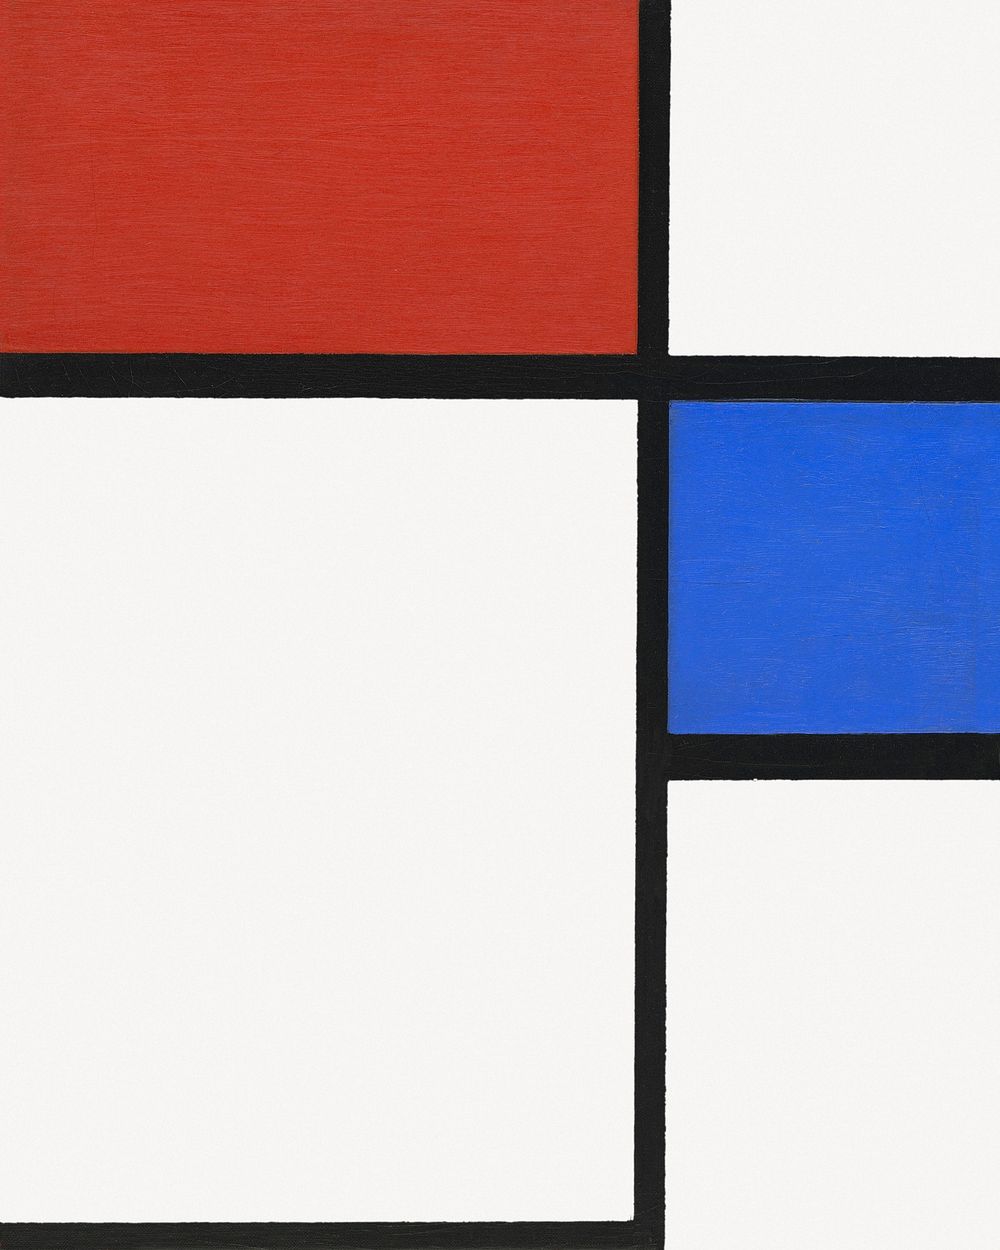 Piet Mondrian&rsquo;s Composition No. II clipart, Cubism art psd. Remixed by rawpixel